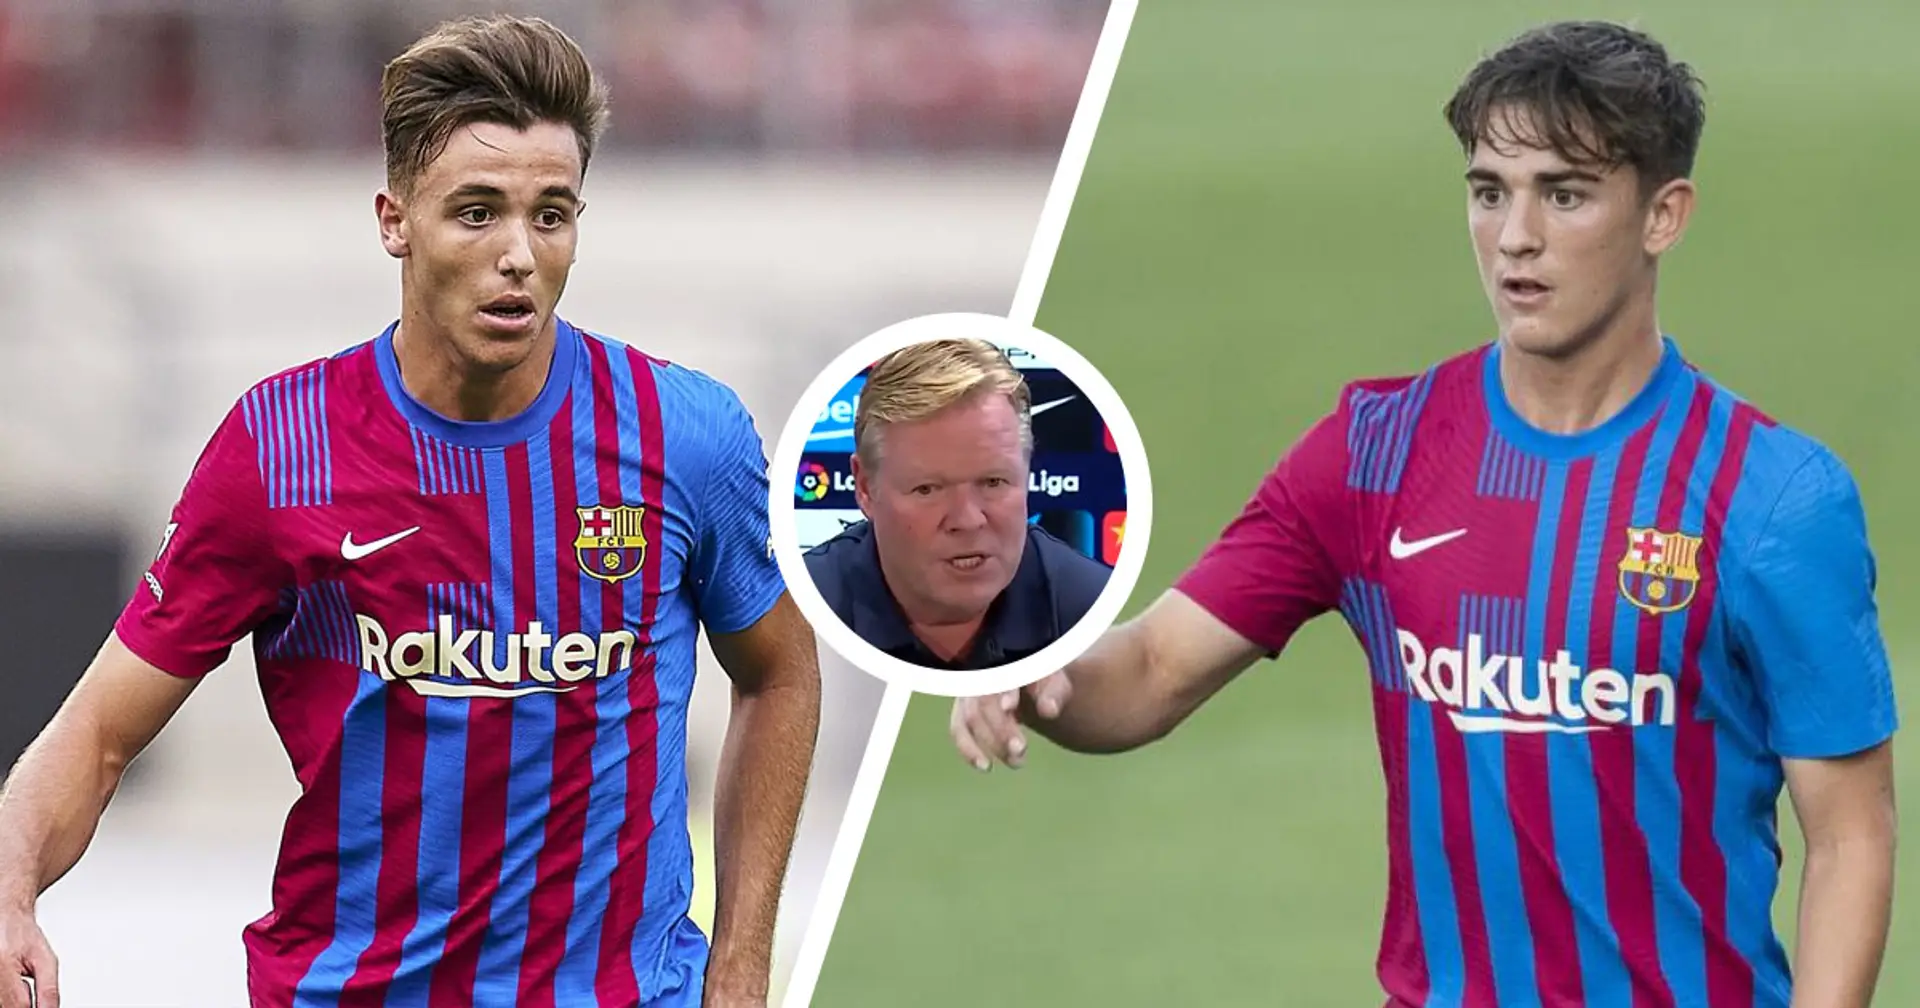 Koeman names 4 youngster who will get chances at Barca this season